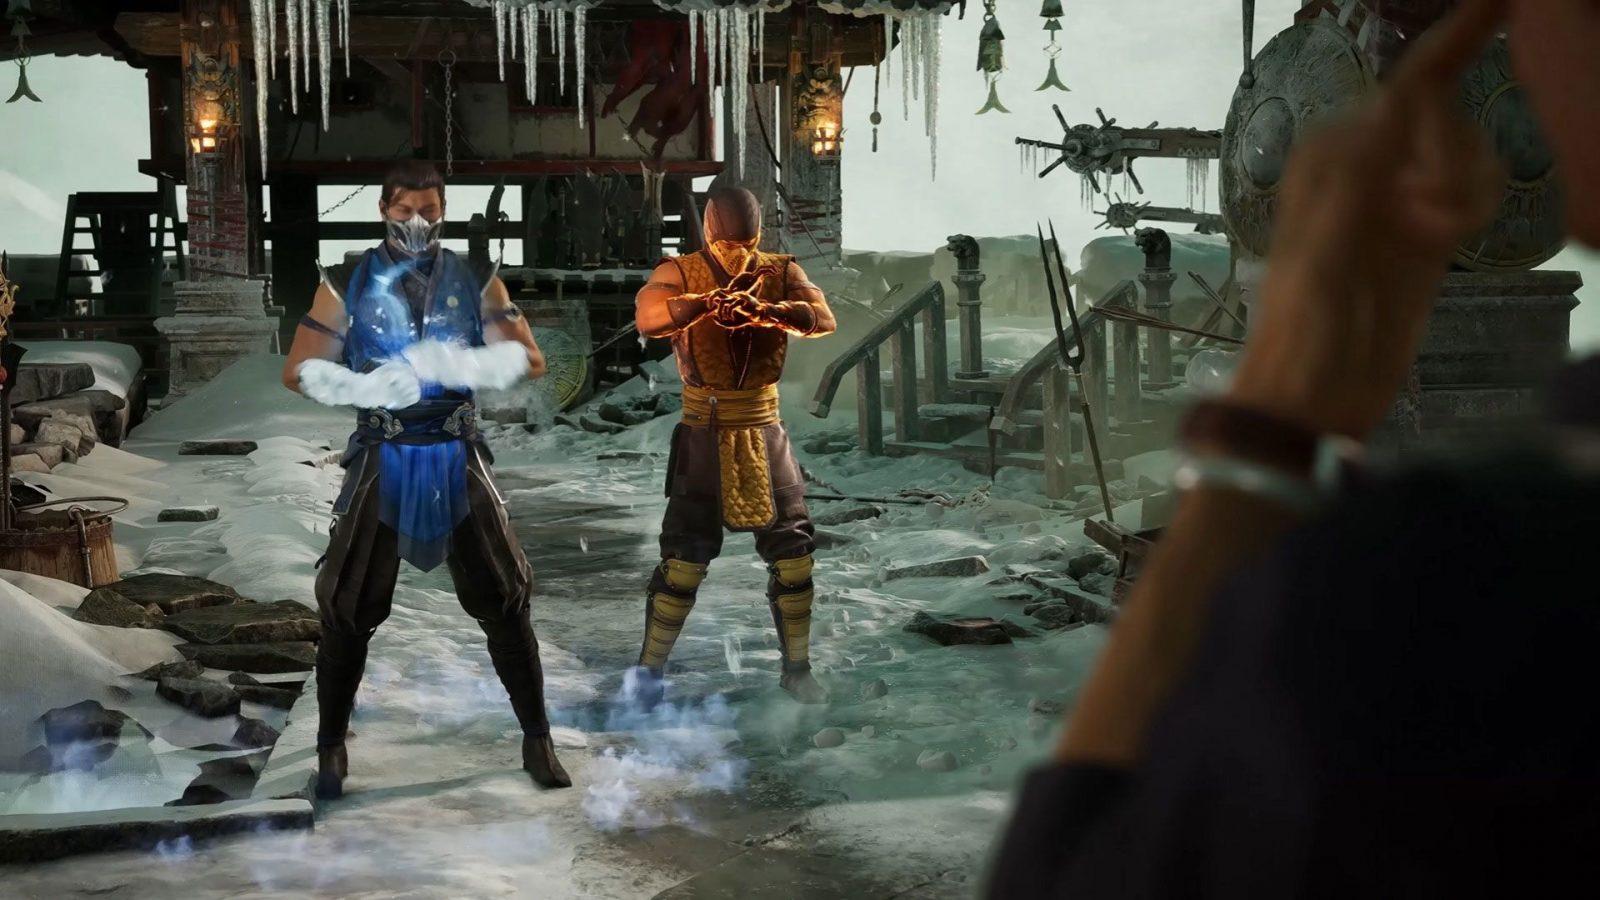 Sub-Zero shows off new full Fatality in Mortal Kombat 1